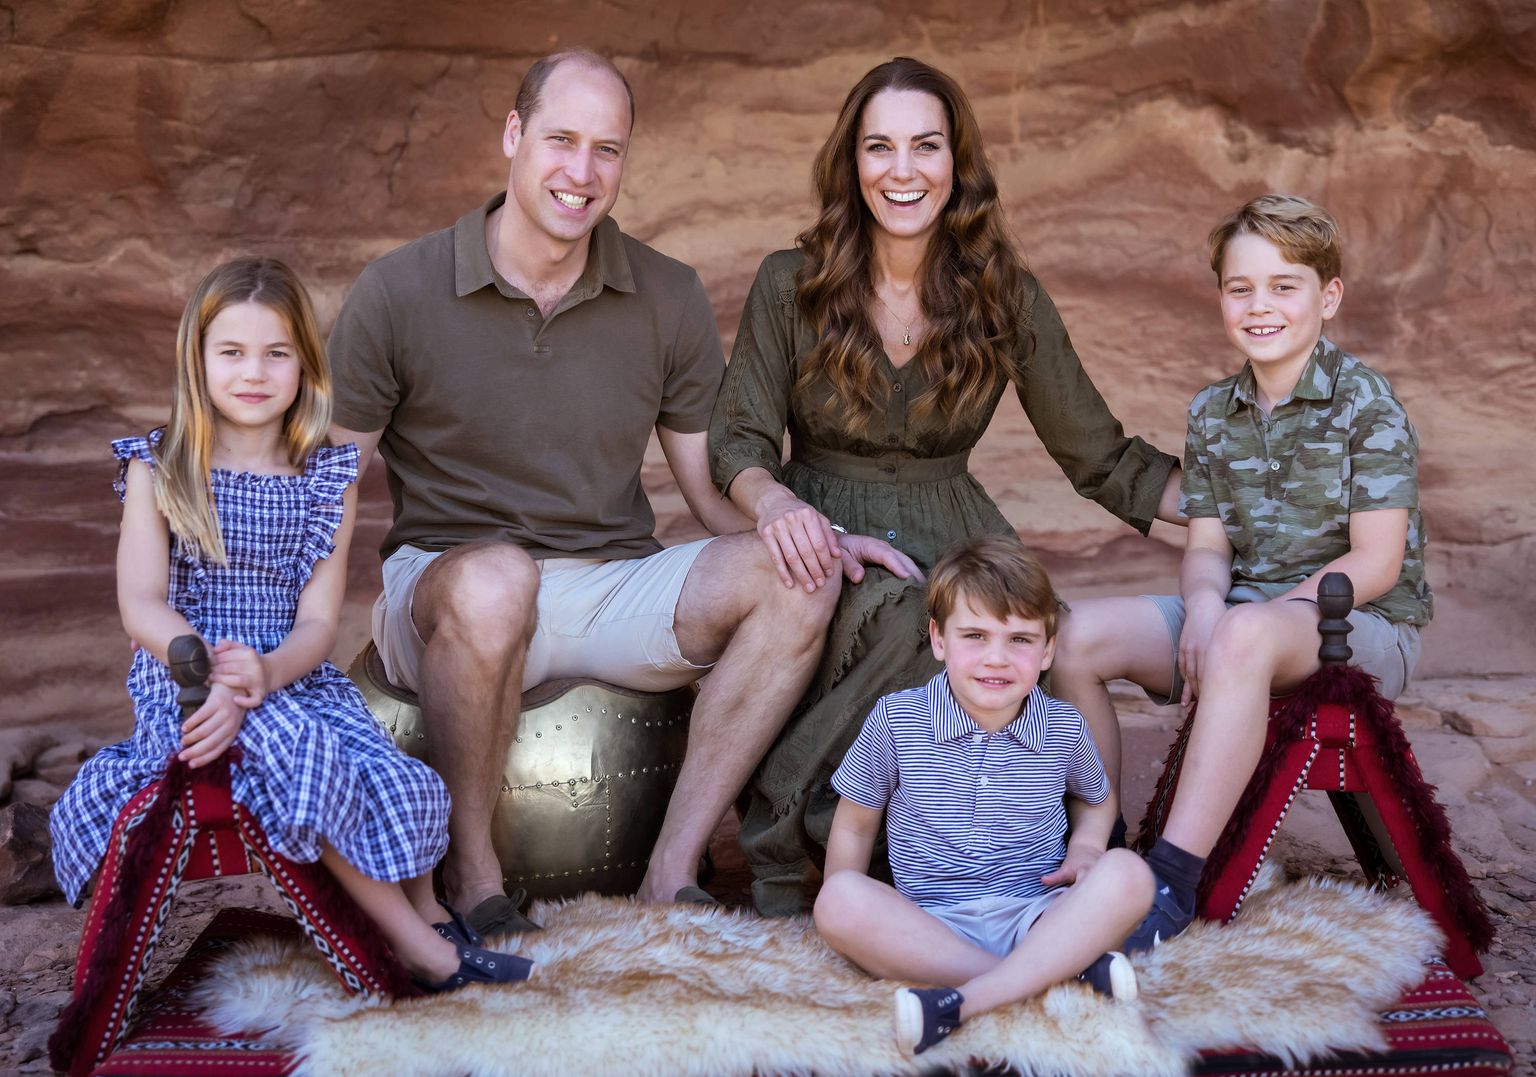 Cambridge`i hertsog prints William ja hertsoginna Kate Middleton ning nende kolm last – prints George, printsess Charlotte ja prints Louis. Foto: Scanpix